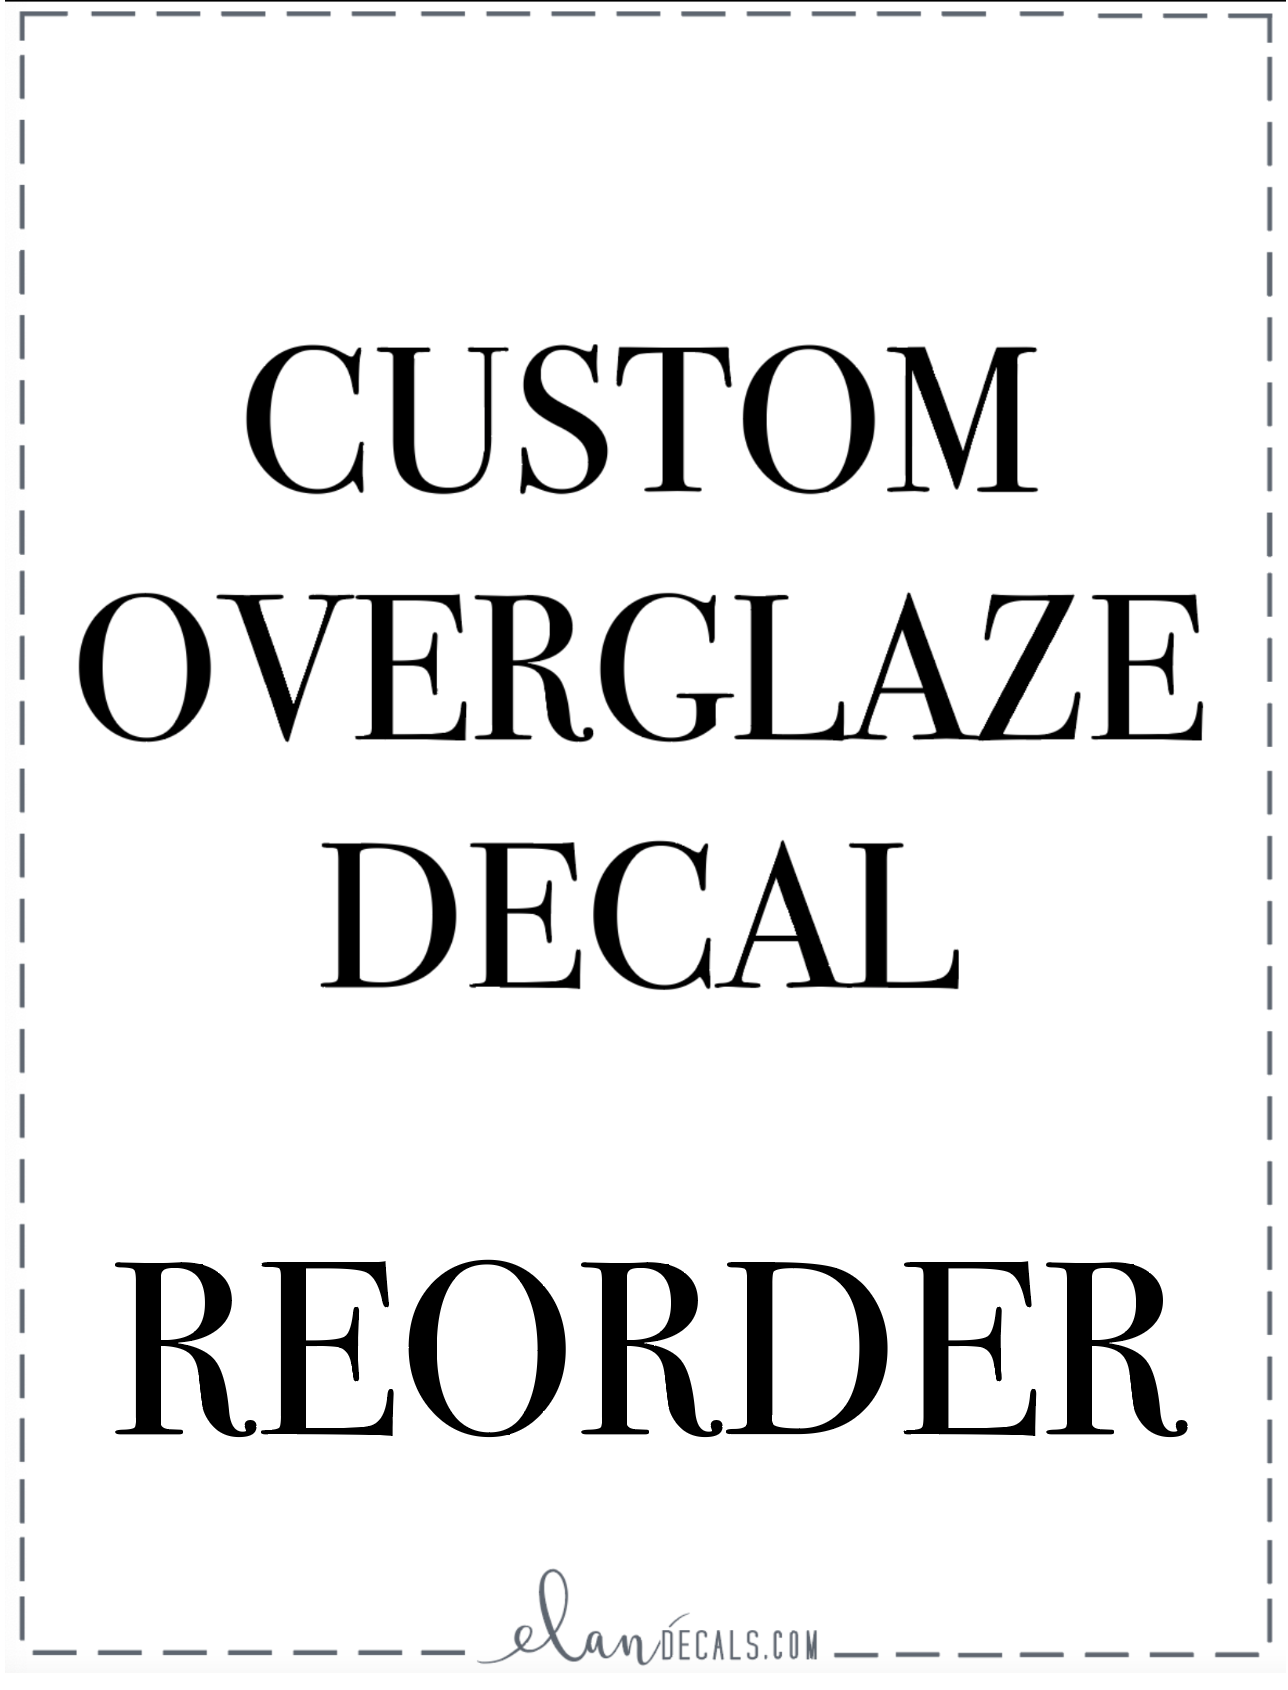 Custom Overglaze Decal Sheet - Reorder of Previous Design